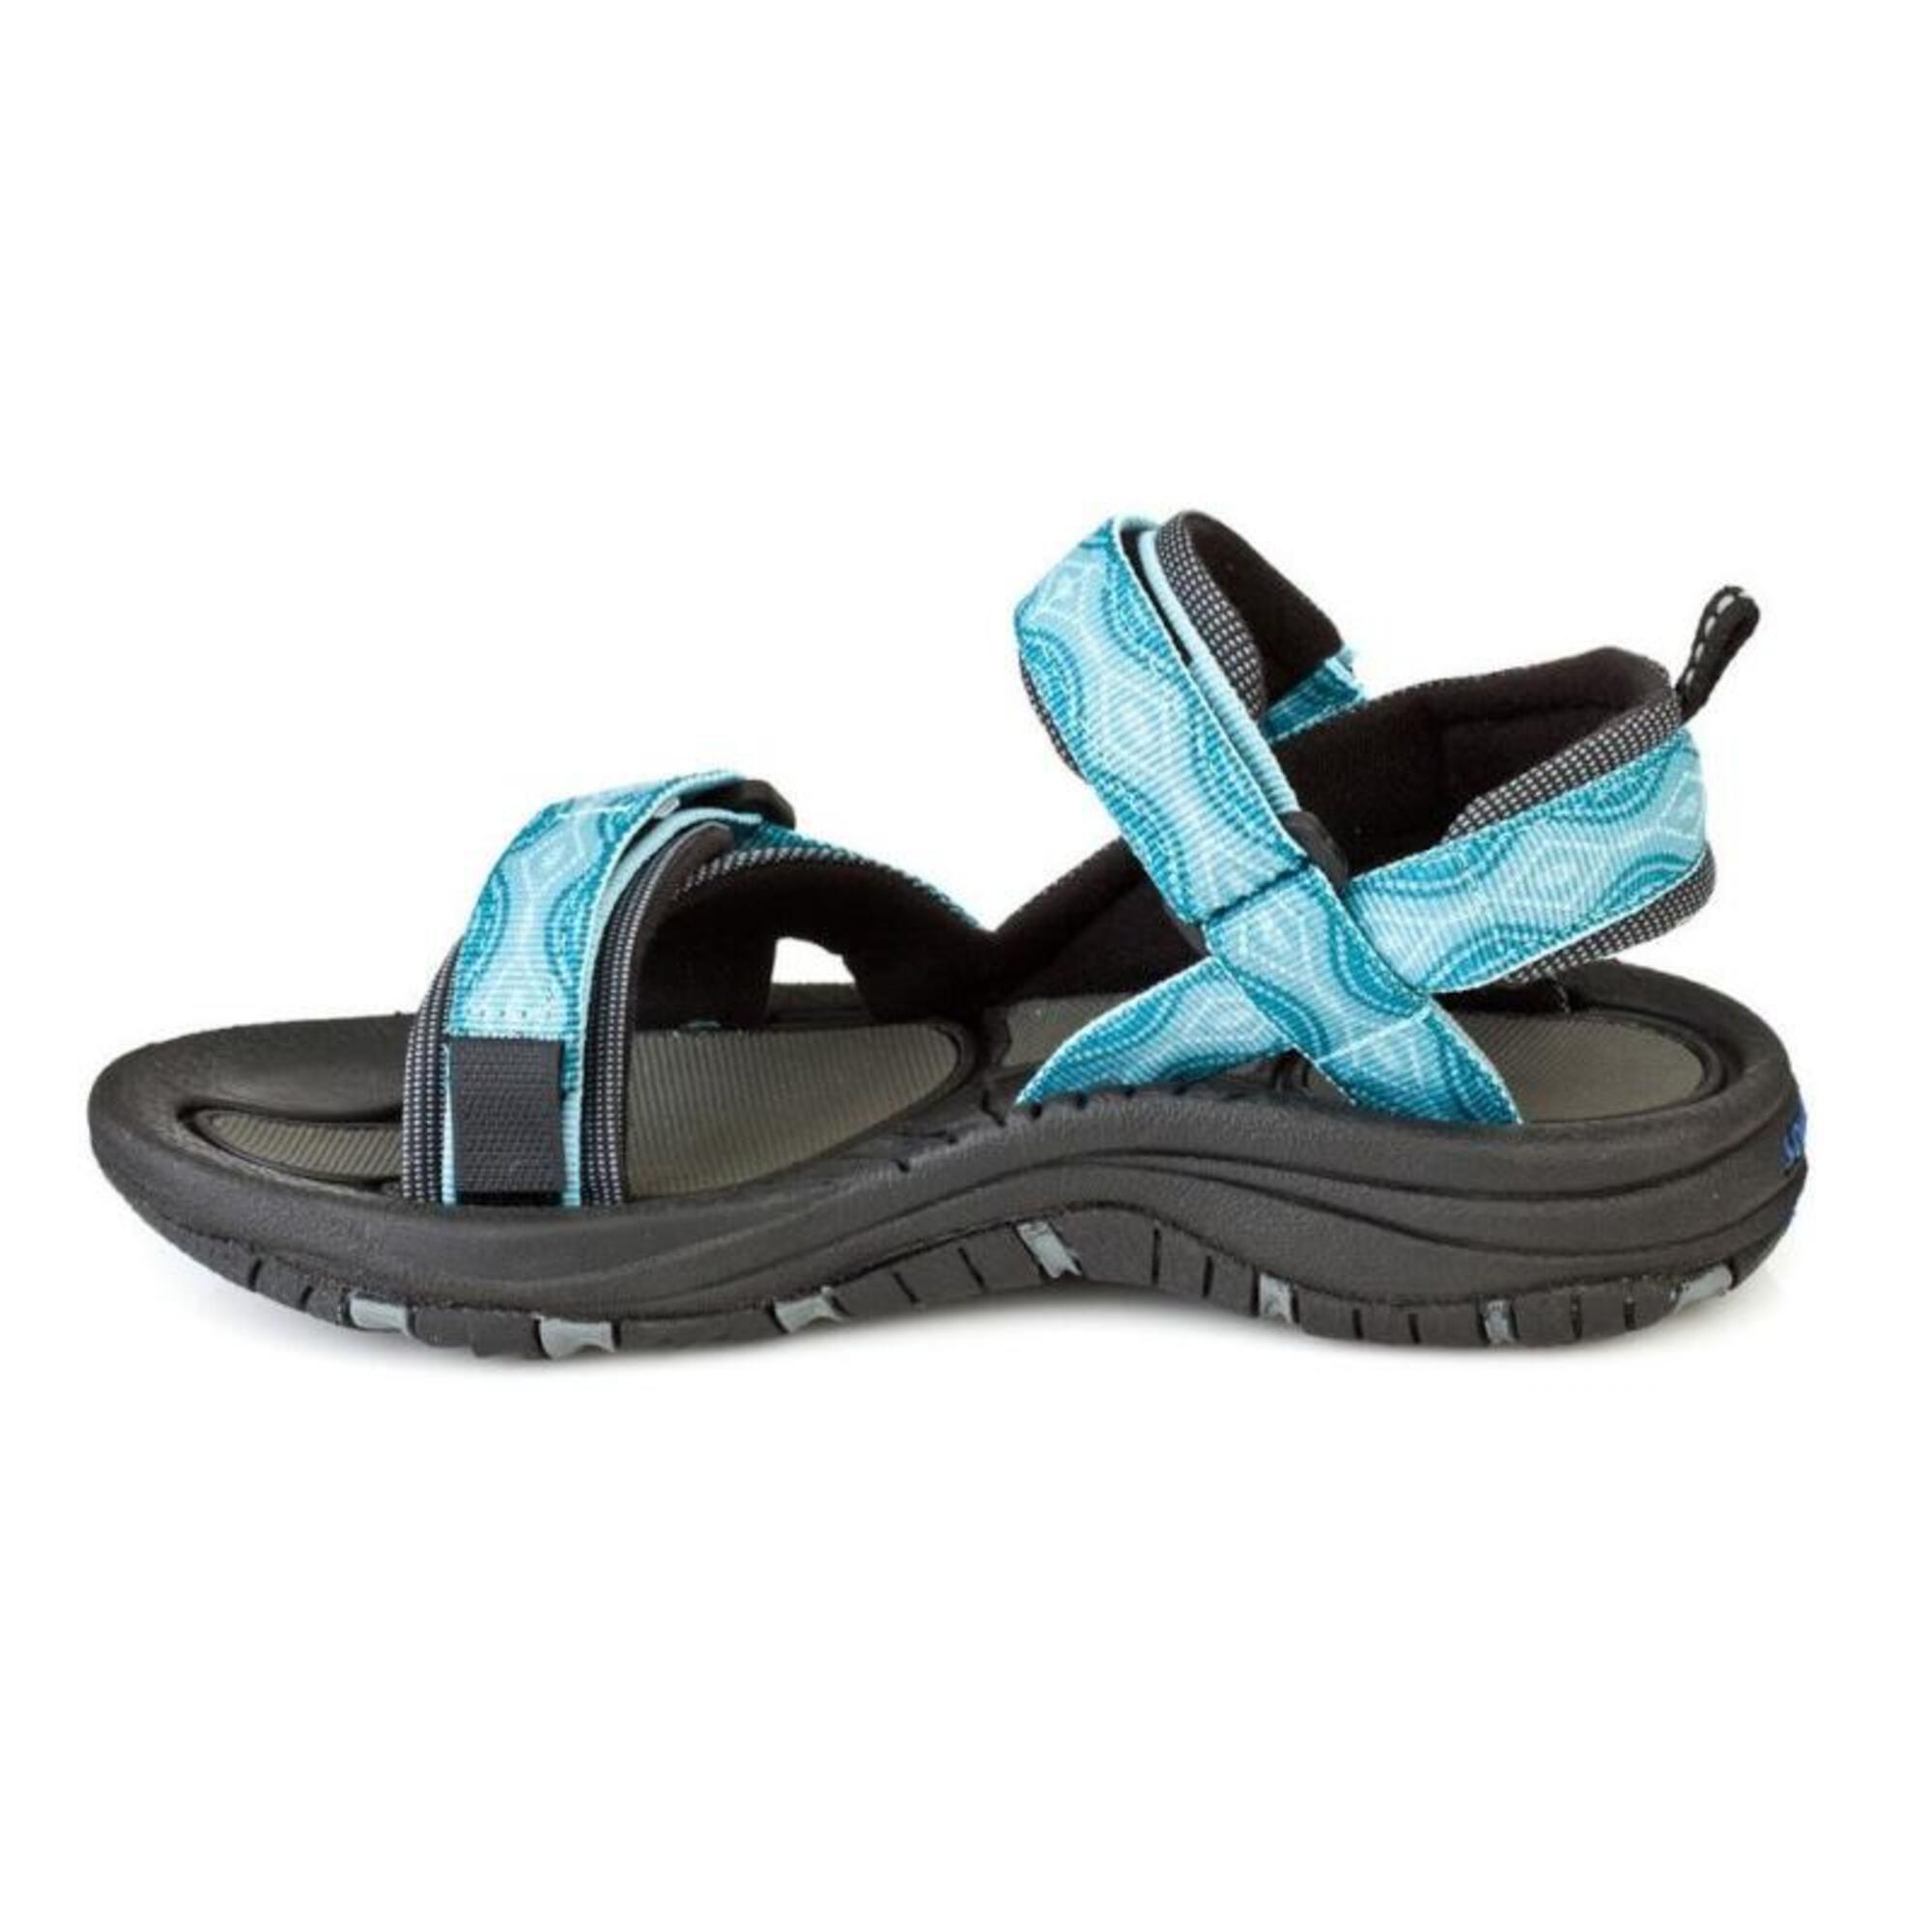 Sandales pour femmes Gobi Dream - outdoor - Bleu